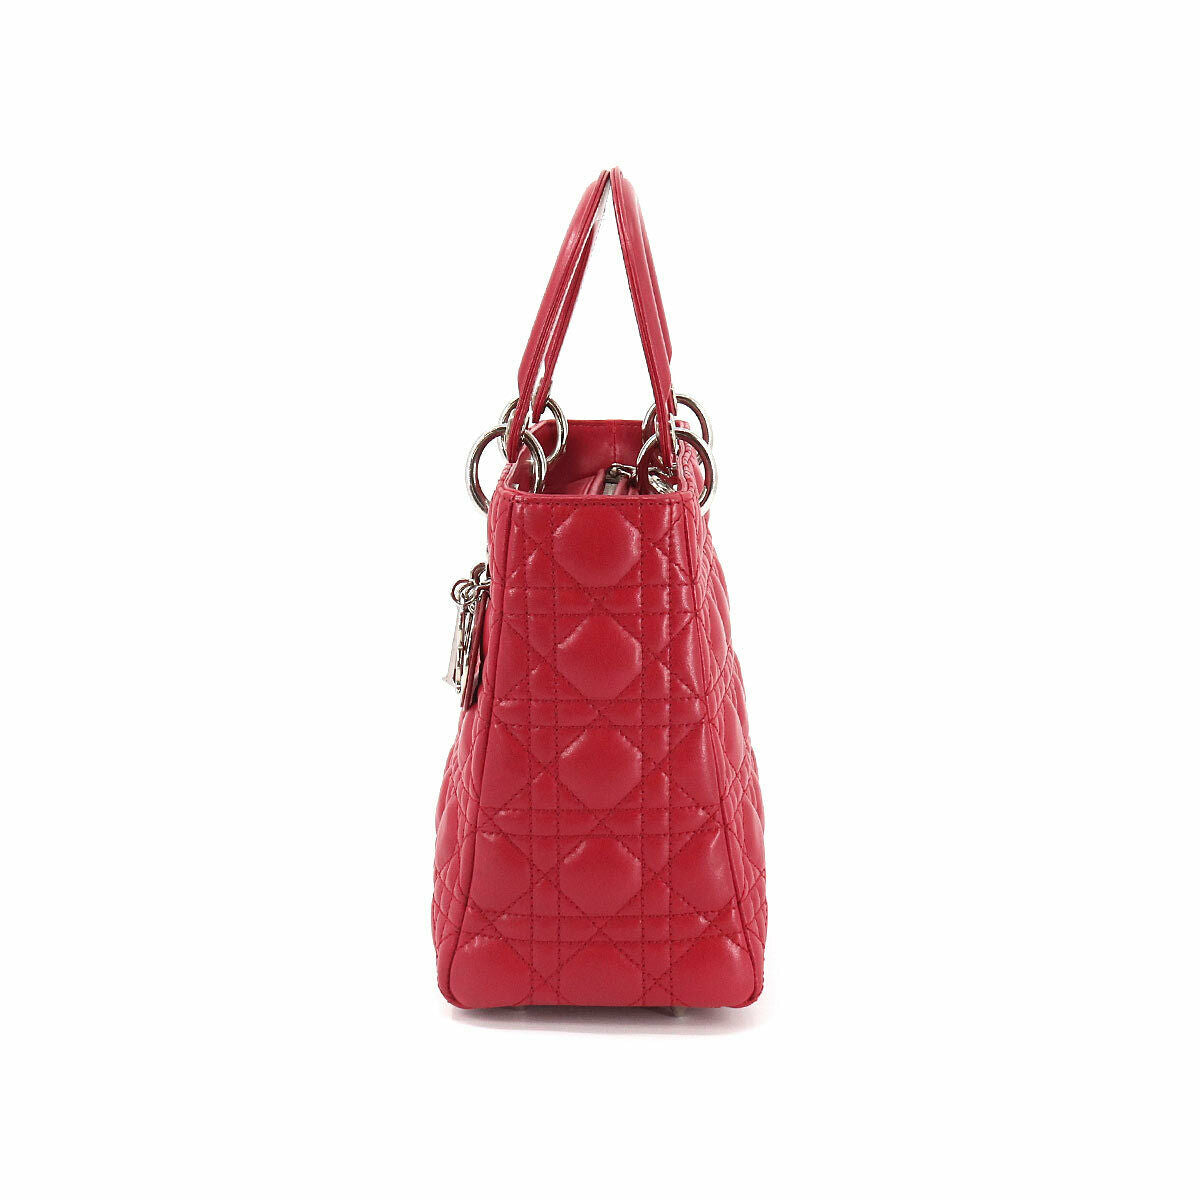 Chiristian Dior Lady Dior 2way Shoulder Bag